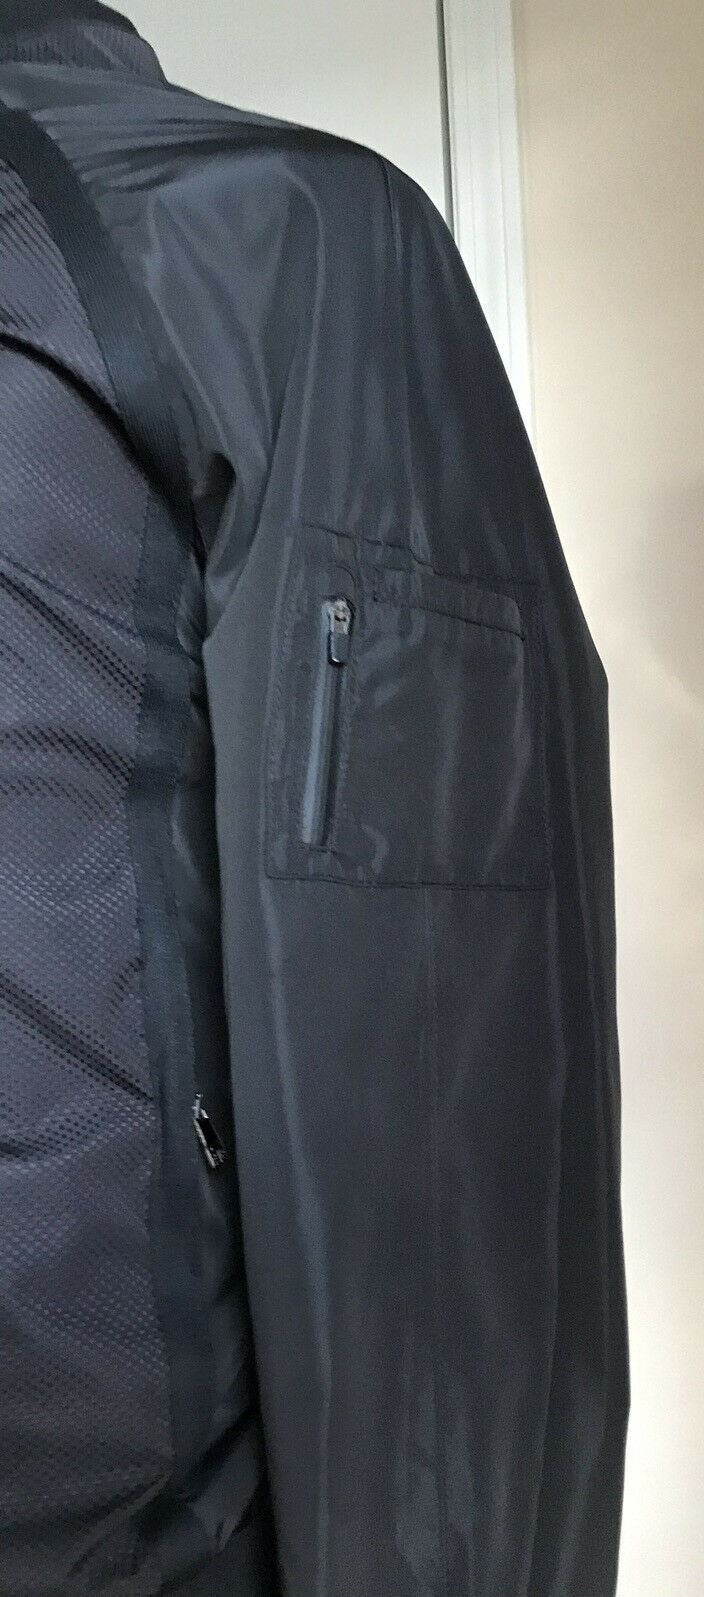 NWT Corneliani Zip-Pocket Sleeve Bomber Jacket Coat L ( 44 US/54 Eu )